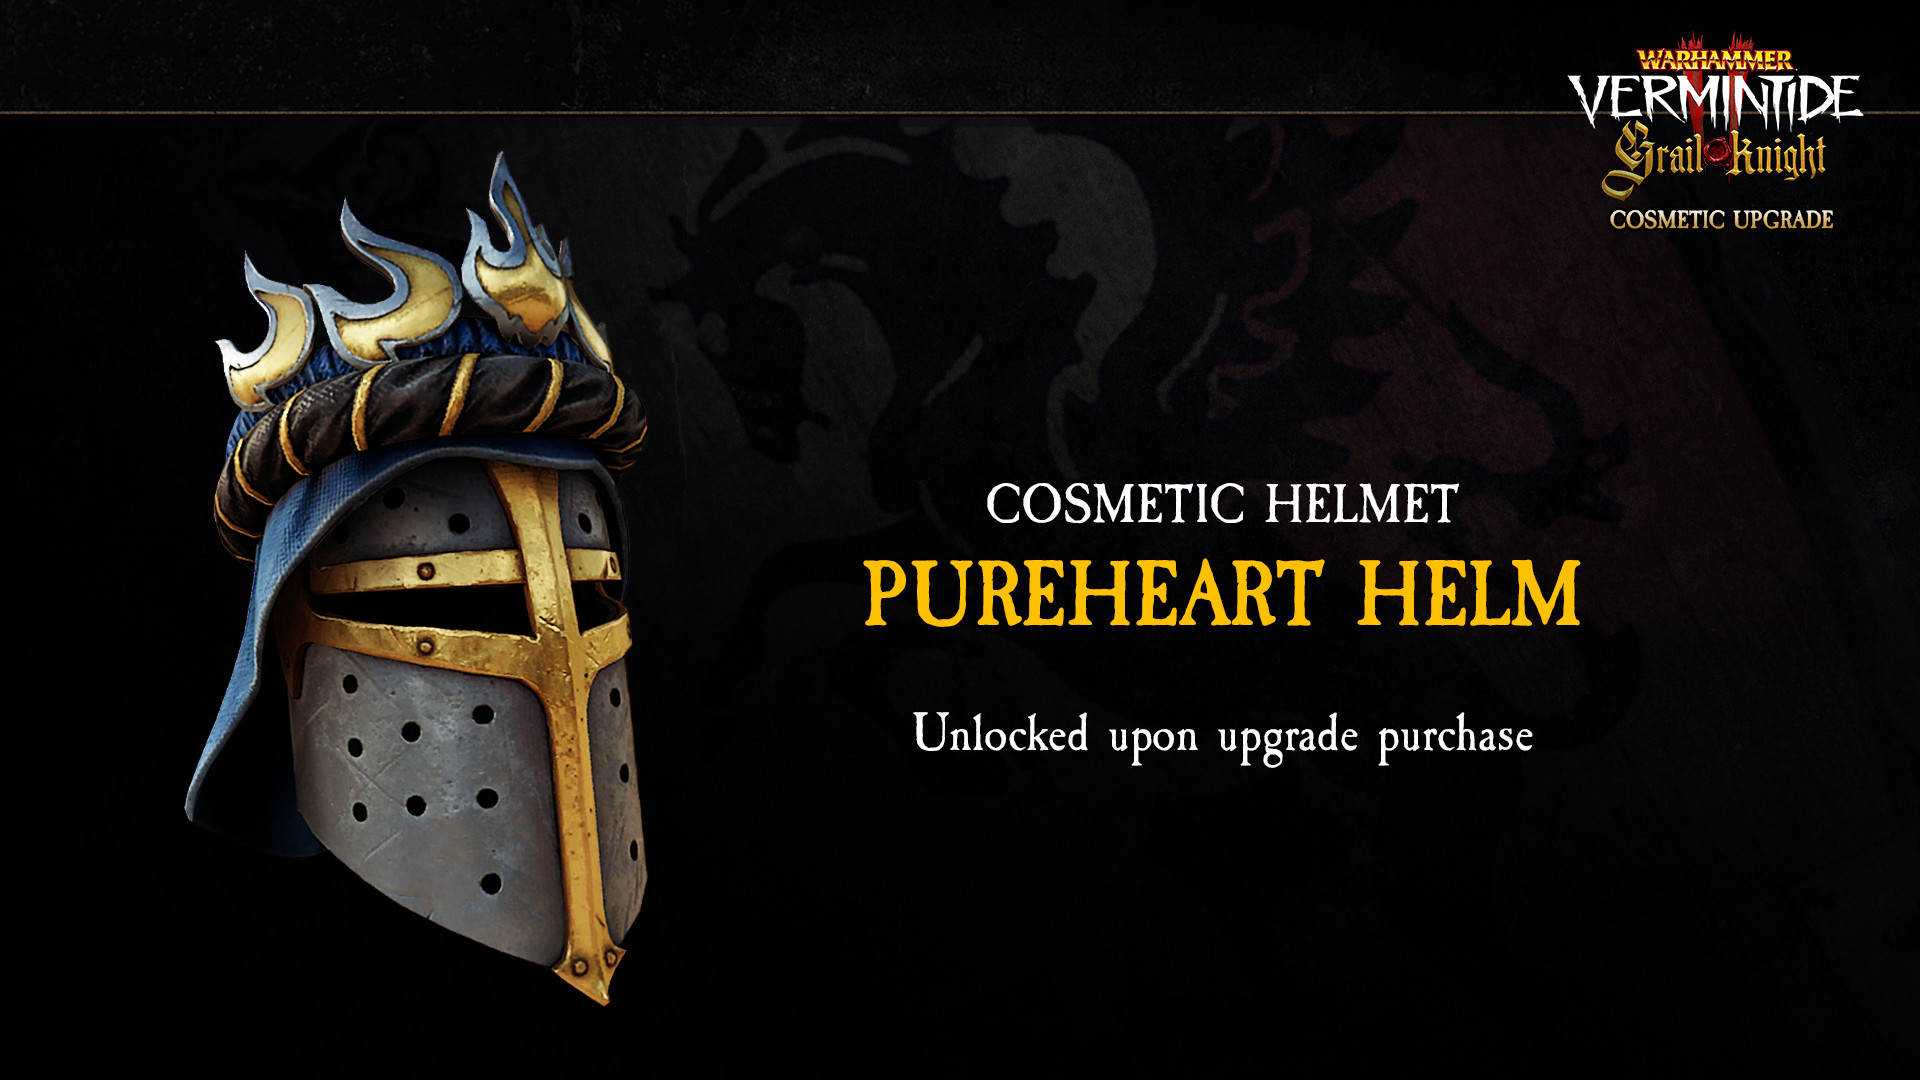 Warhammer: Vermintide 2 - Grail Knight Cosmetic Upgrade DLC Steam CD Key 5.57 USD